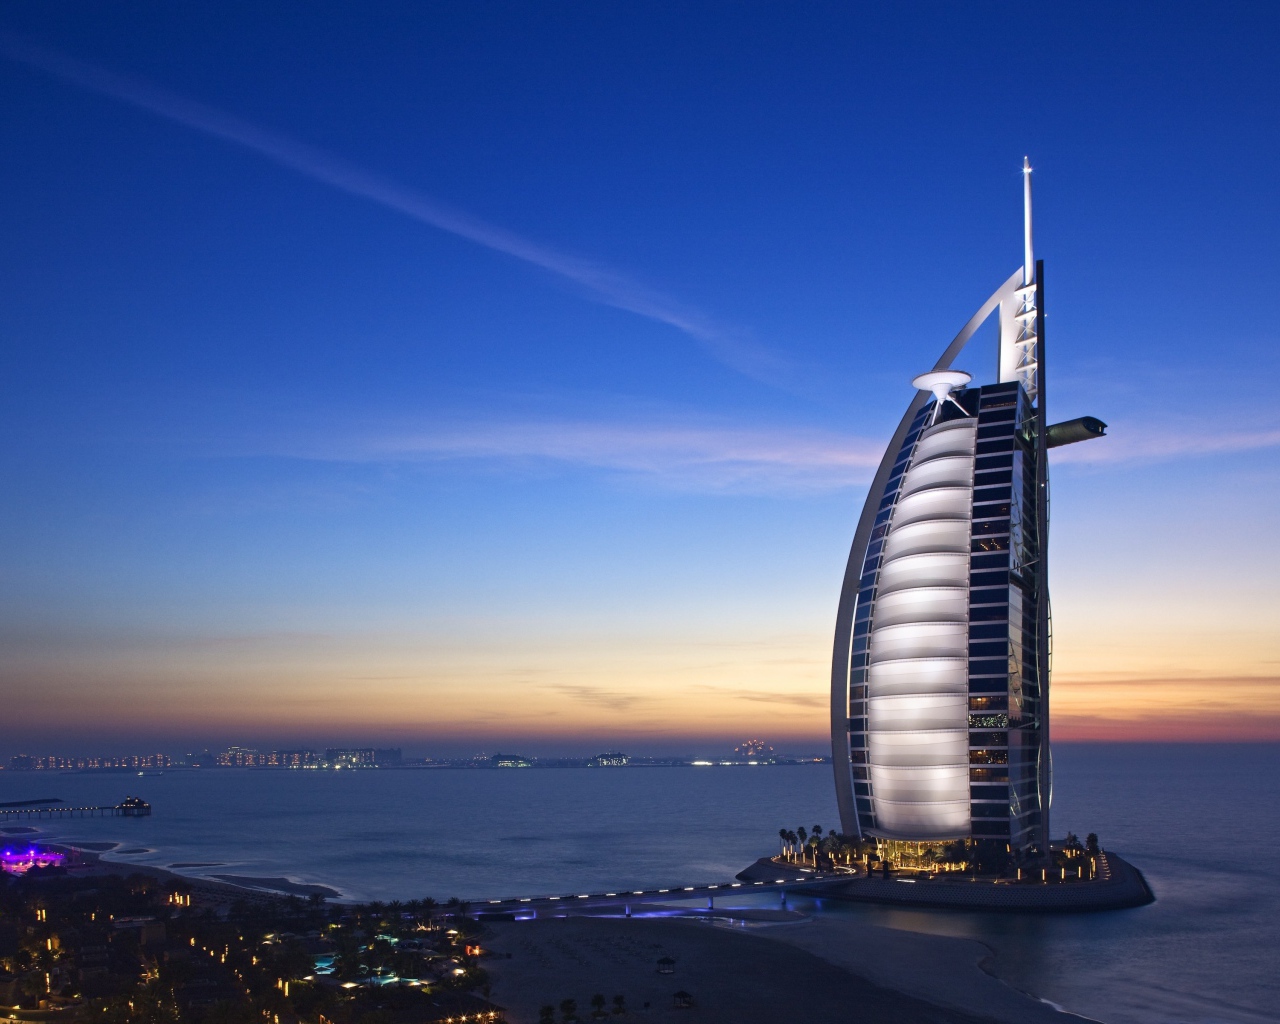 Красивое здание отеля Бурдж Аль Араб, Дубай. ОАЭ